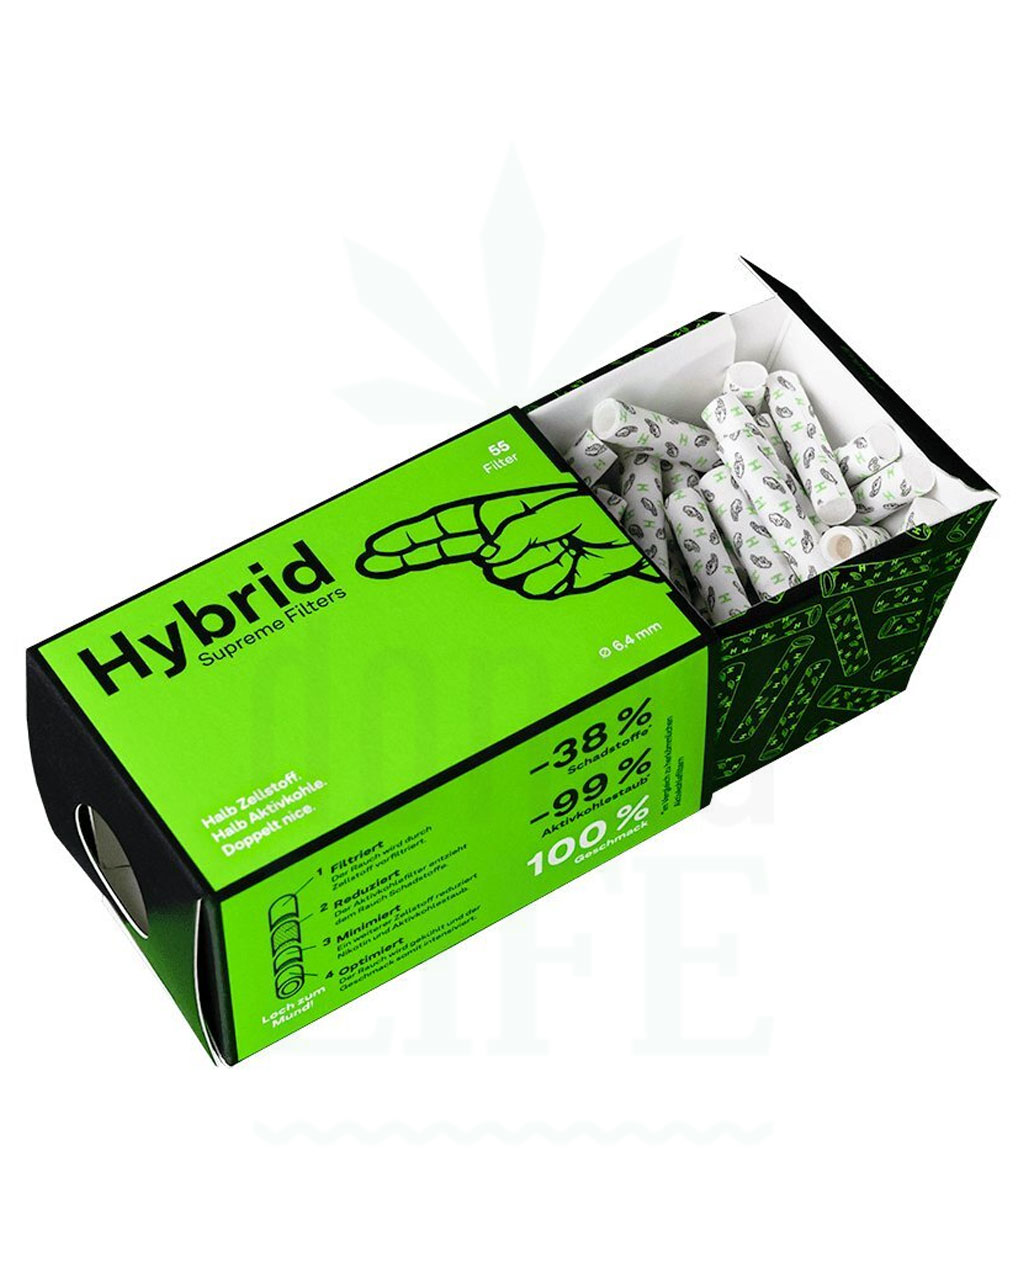 Headshop HYBRID Aktivkohle Filter + Zellstoff  | 6,4 mm | 50 Stück